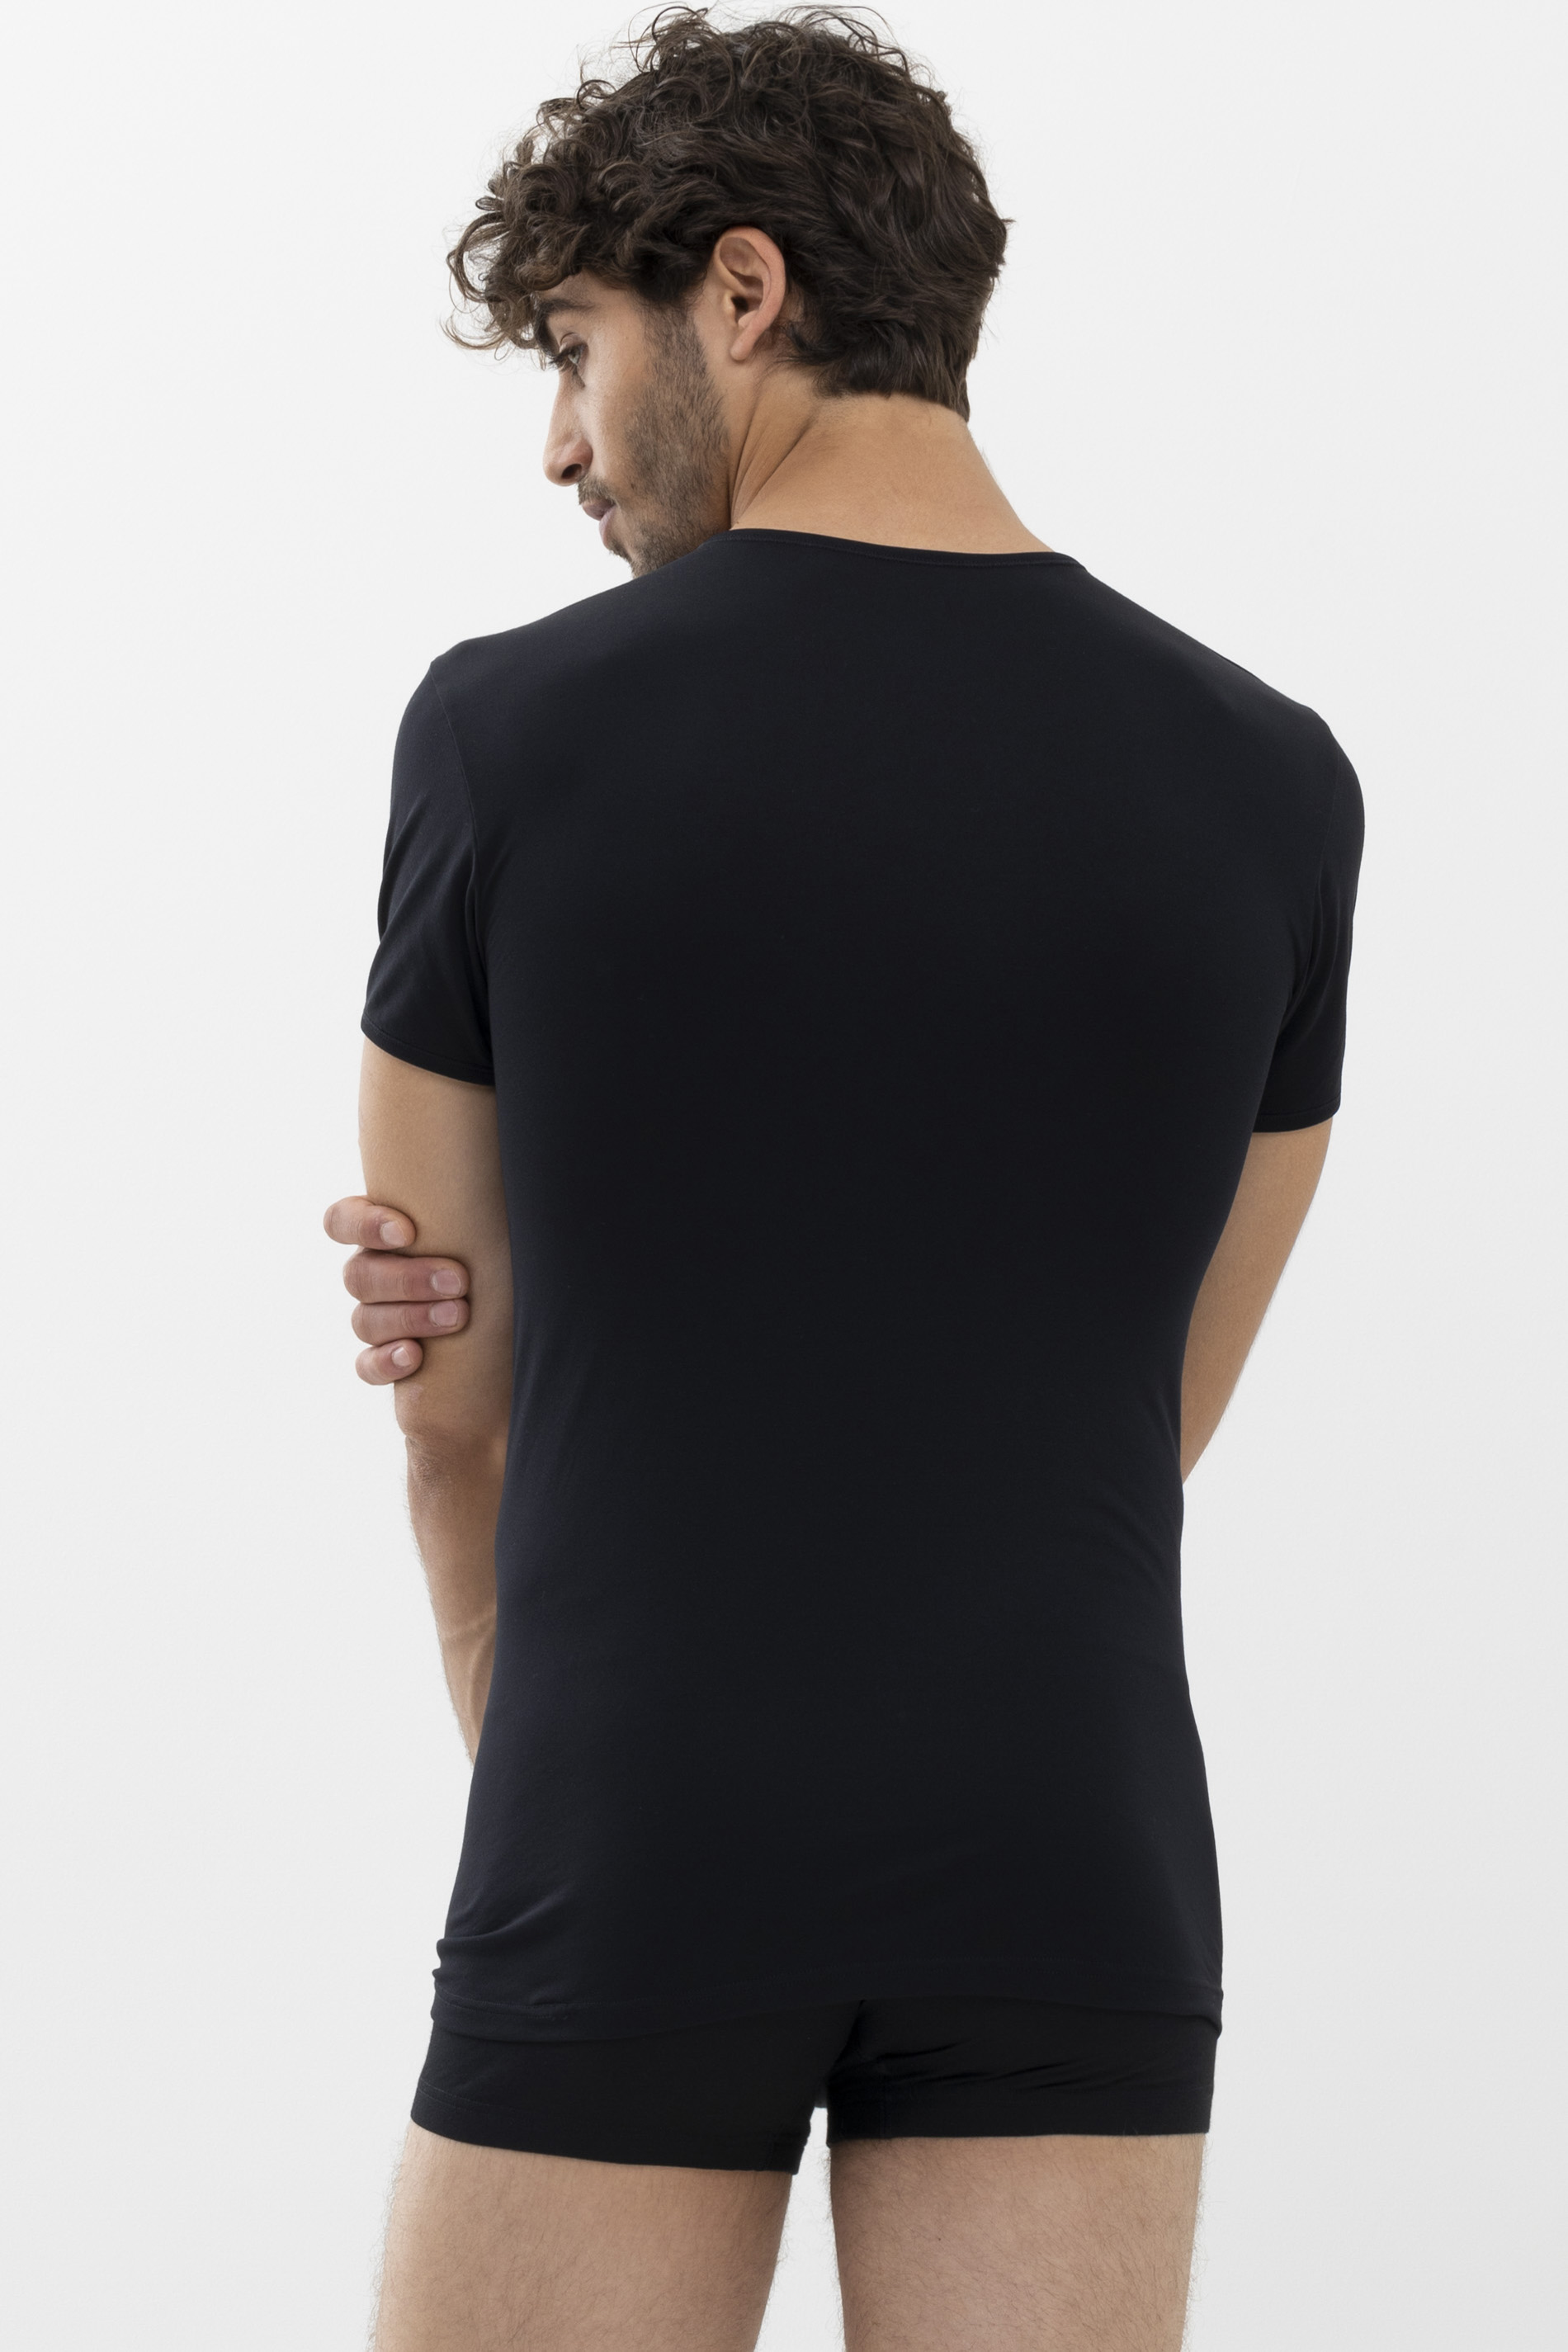 Shirt Black Serie Software Rear View | mey®